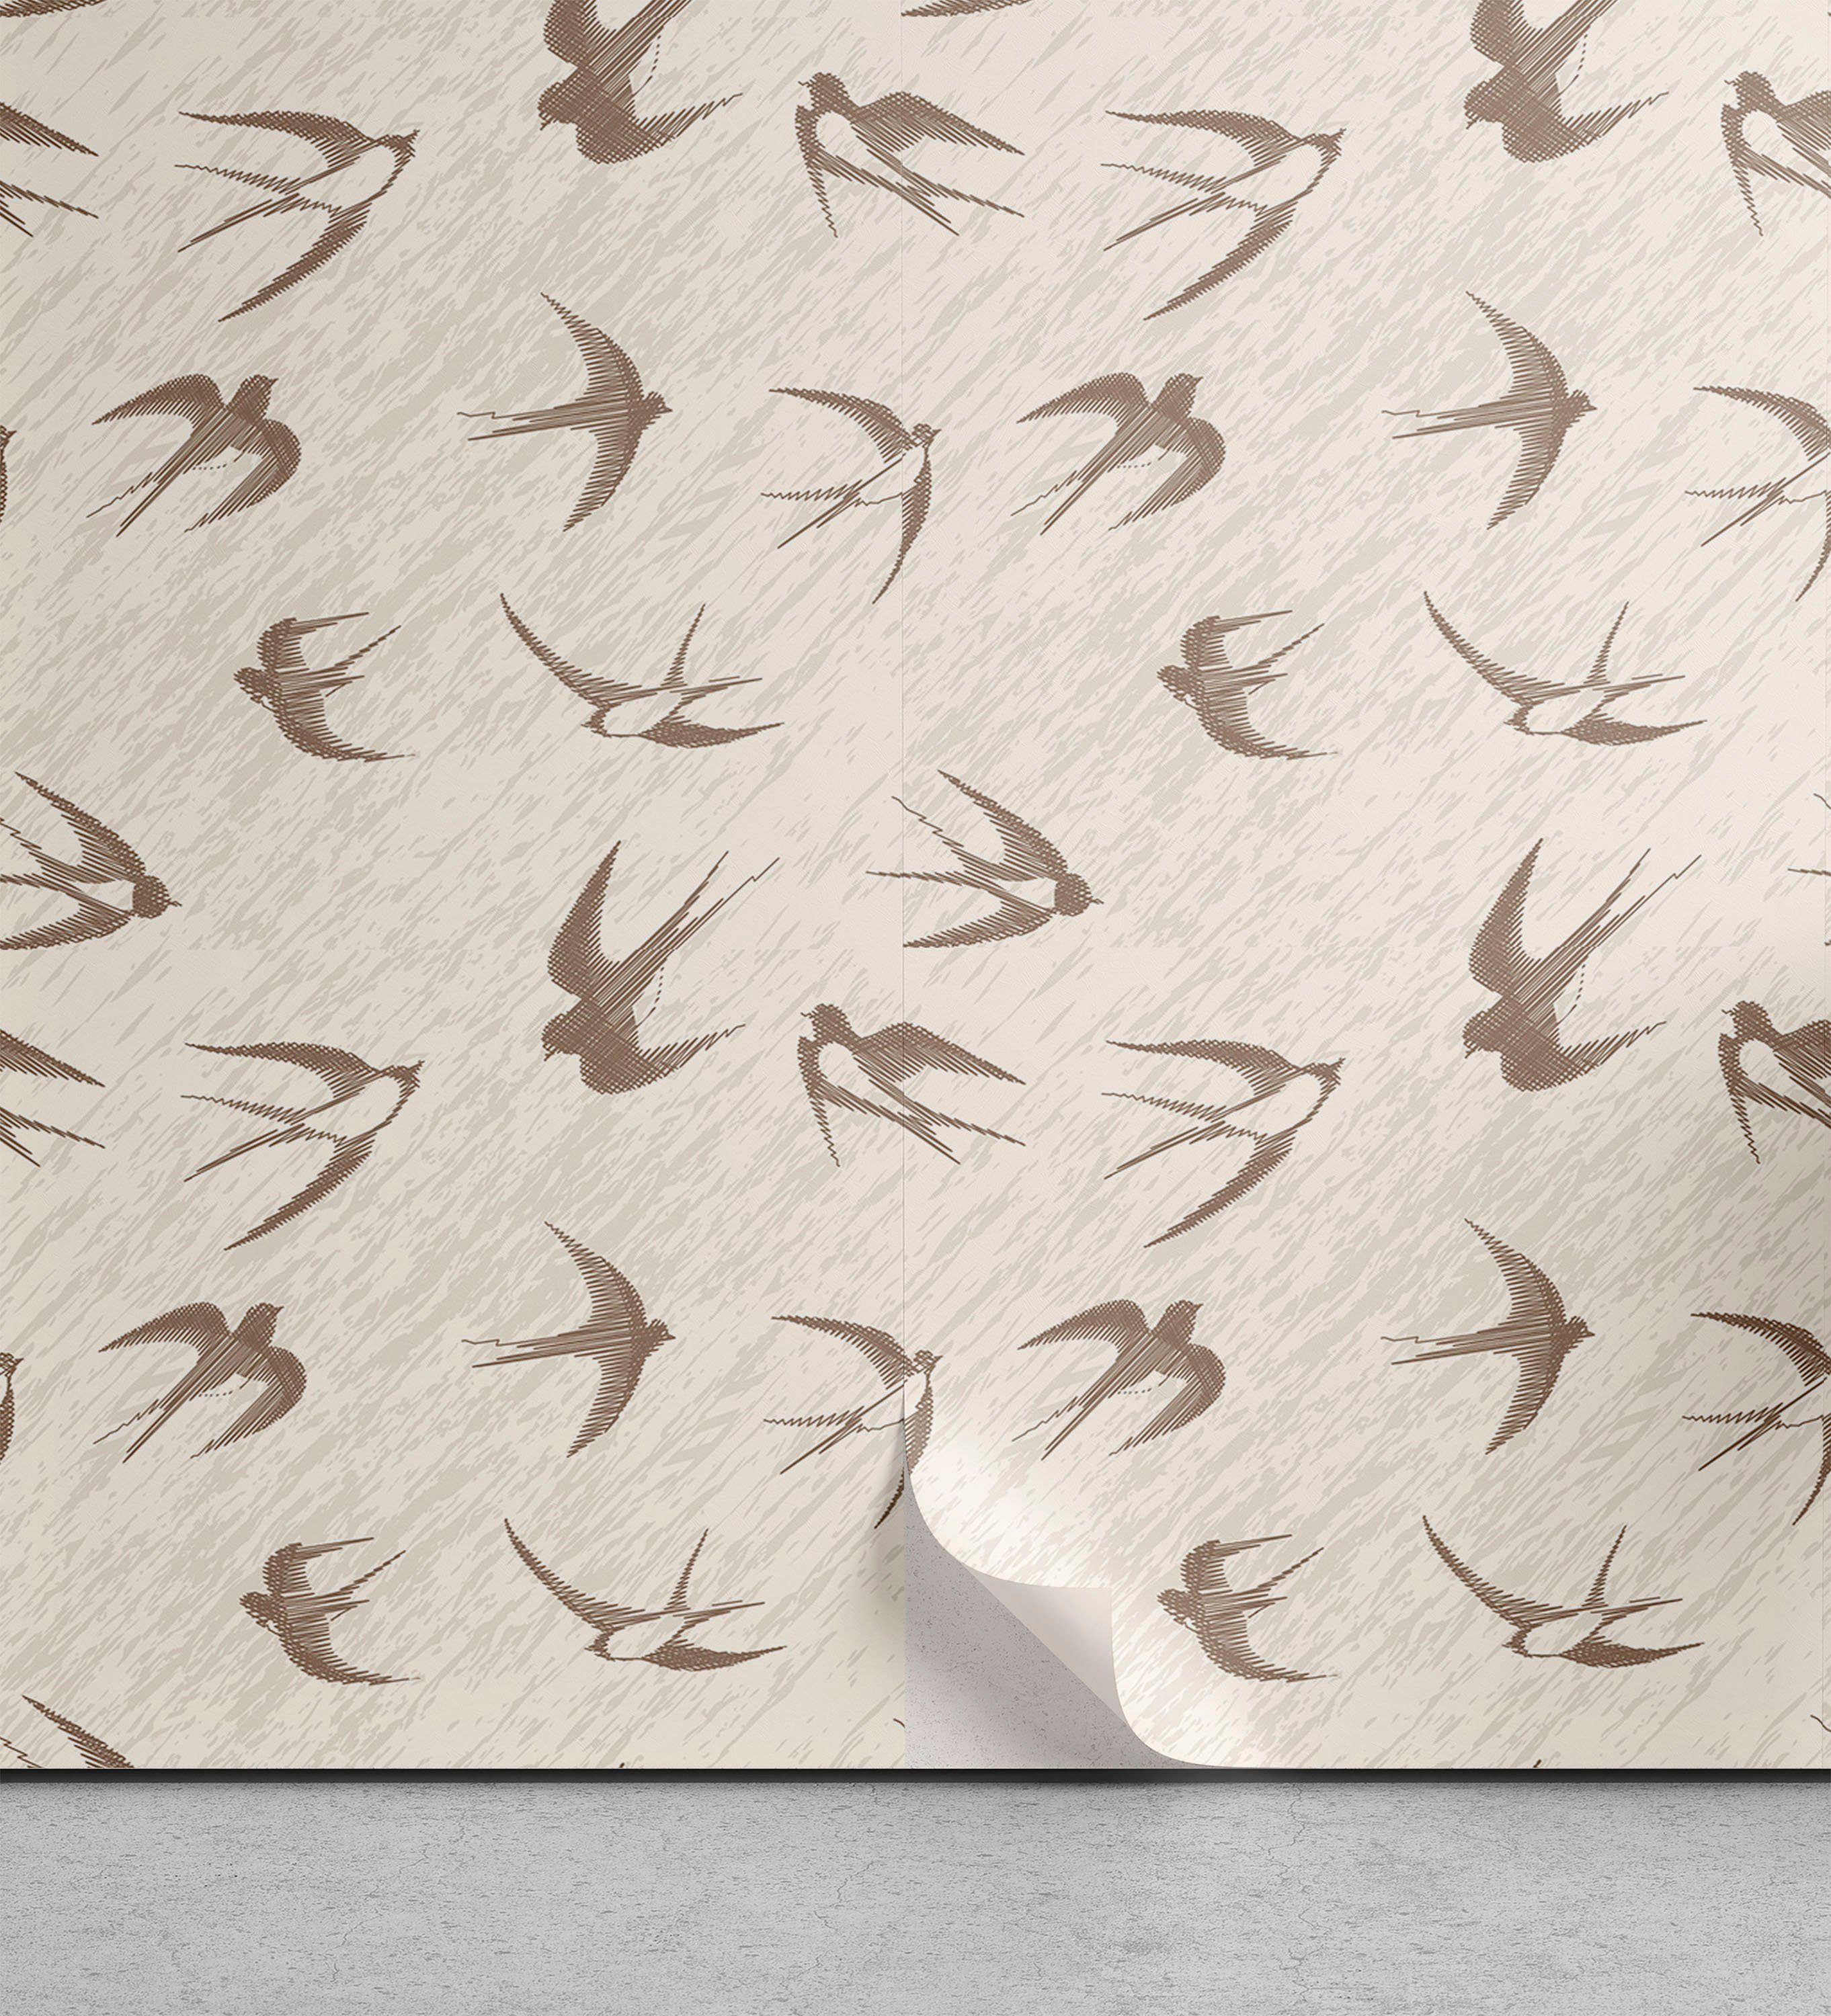 Abakuhaus Wohnzimmer Birds selbstklebendes Vinyltapete Abstrakt flying Küchenakzent,